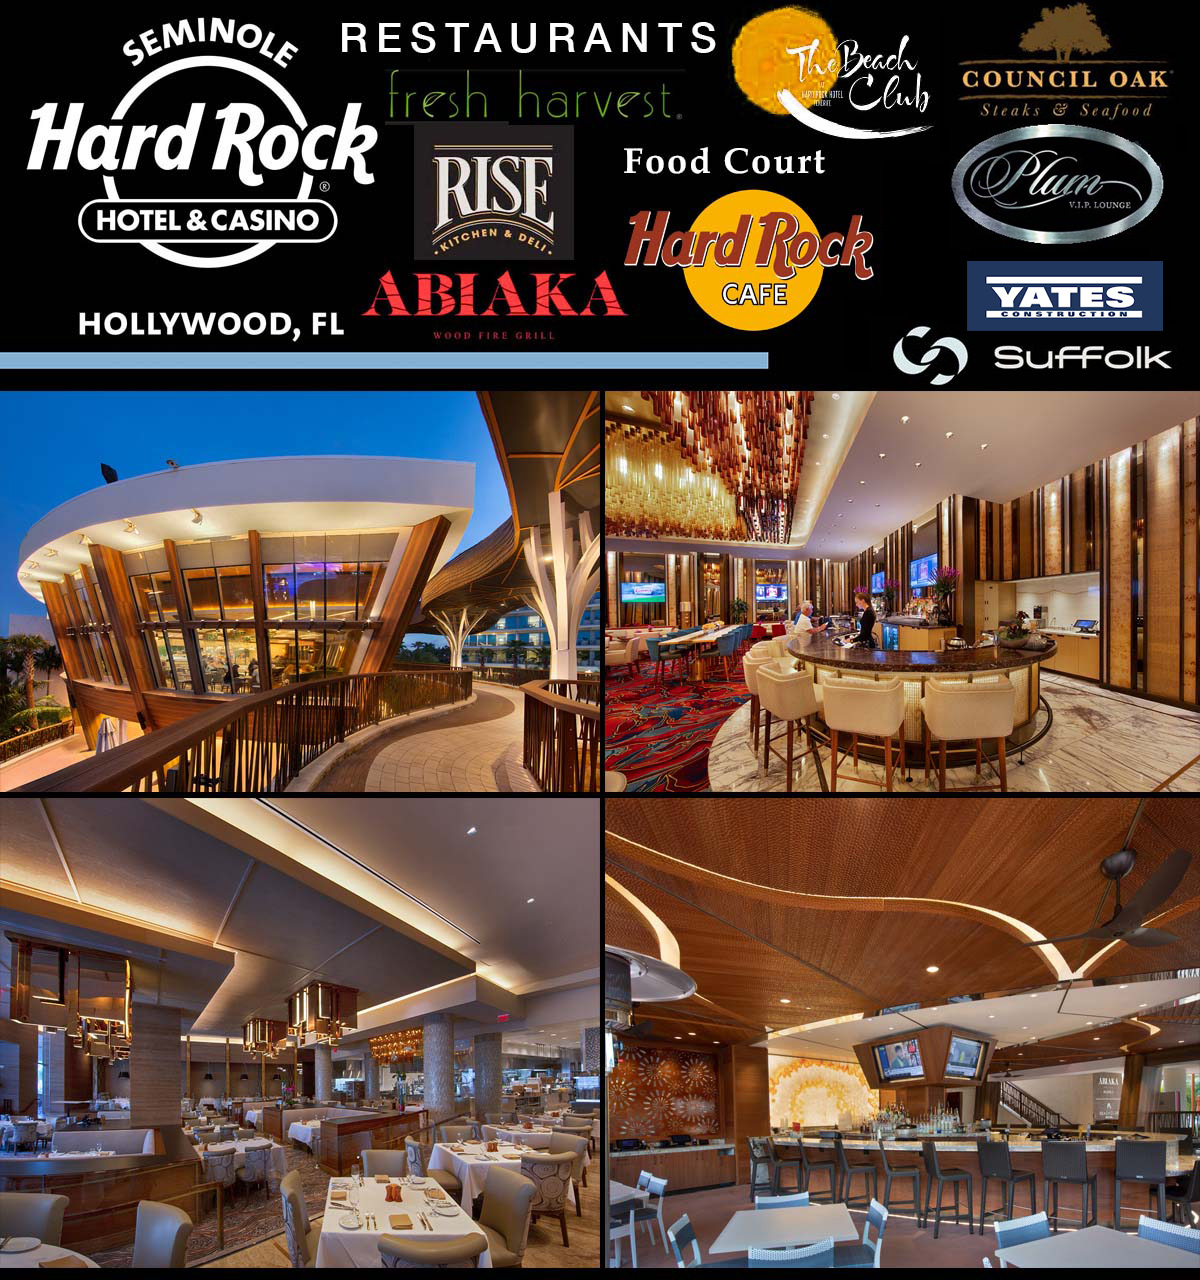 Hard Rock Hollywood hotel and casino restaurants.